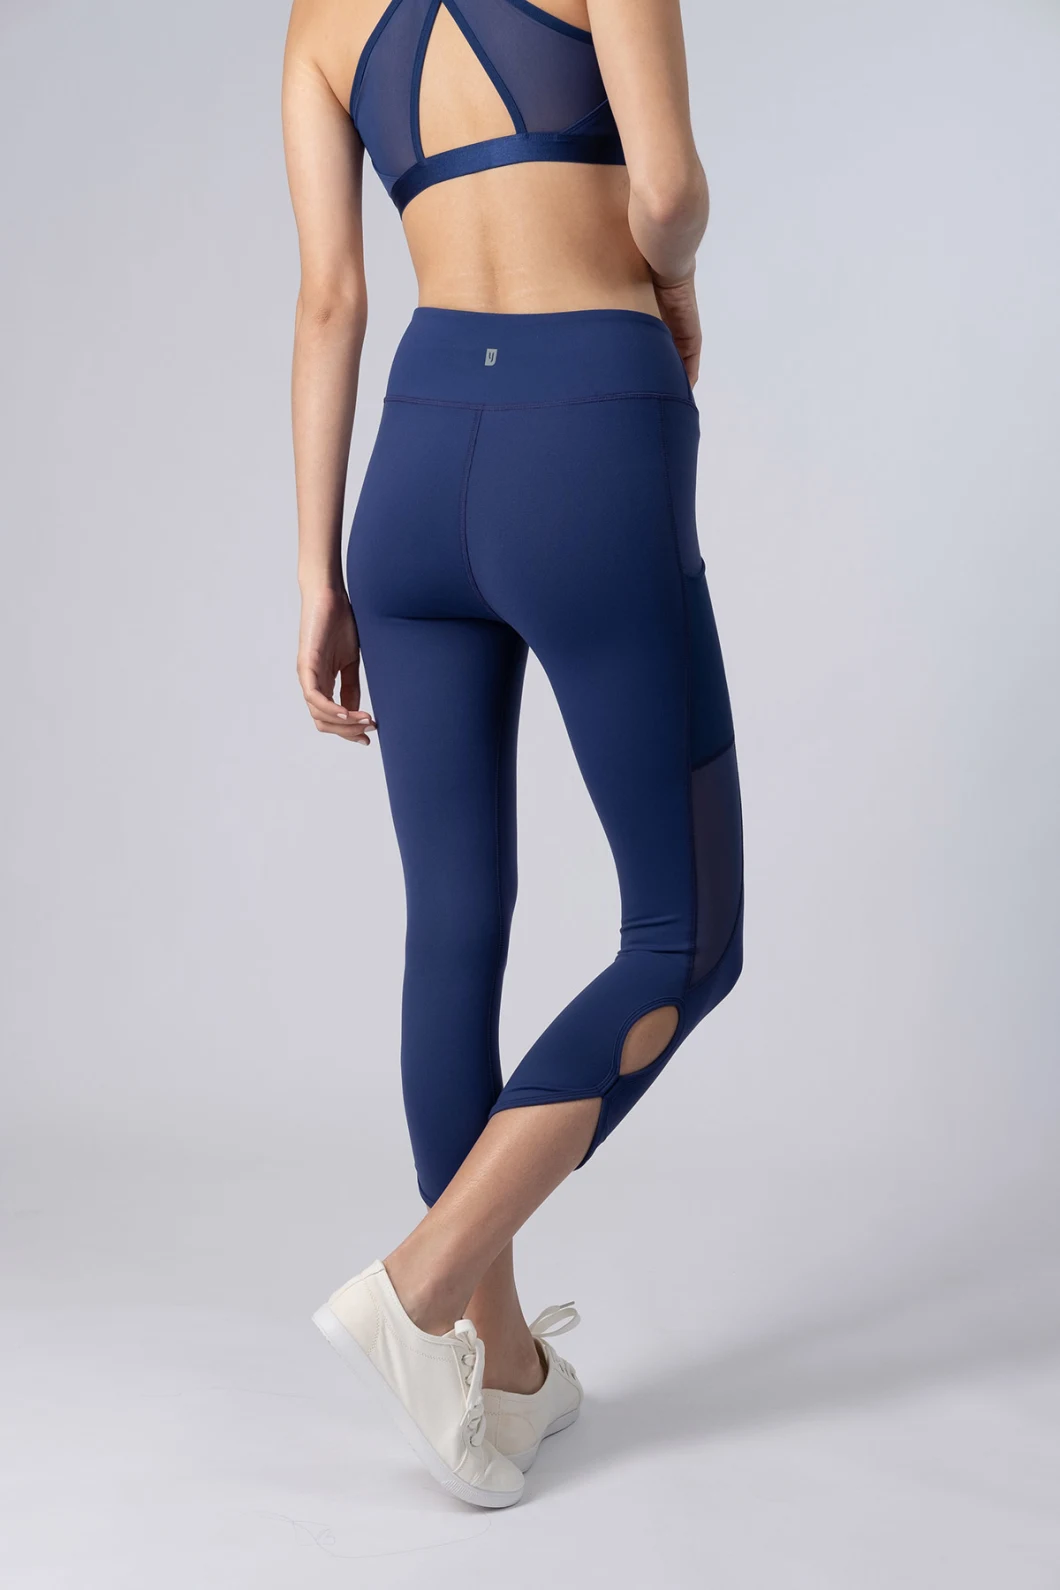 Custom Fitness New Design Women Workout Clothing Gym Tights Capri Yoga Leggings